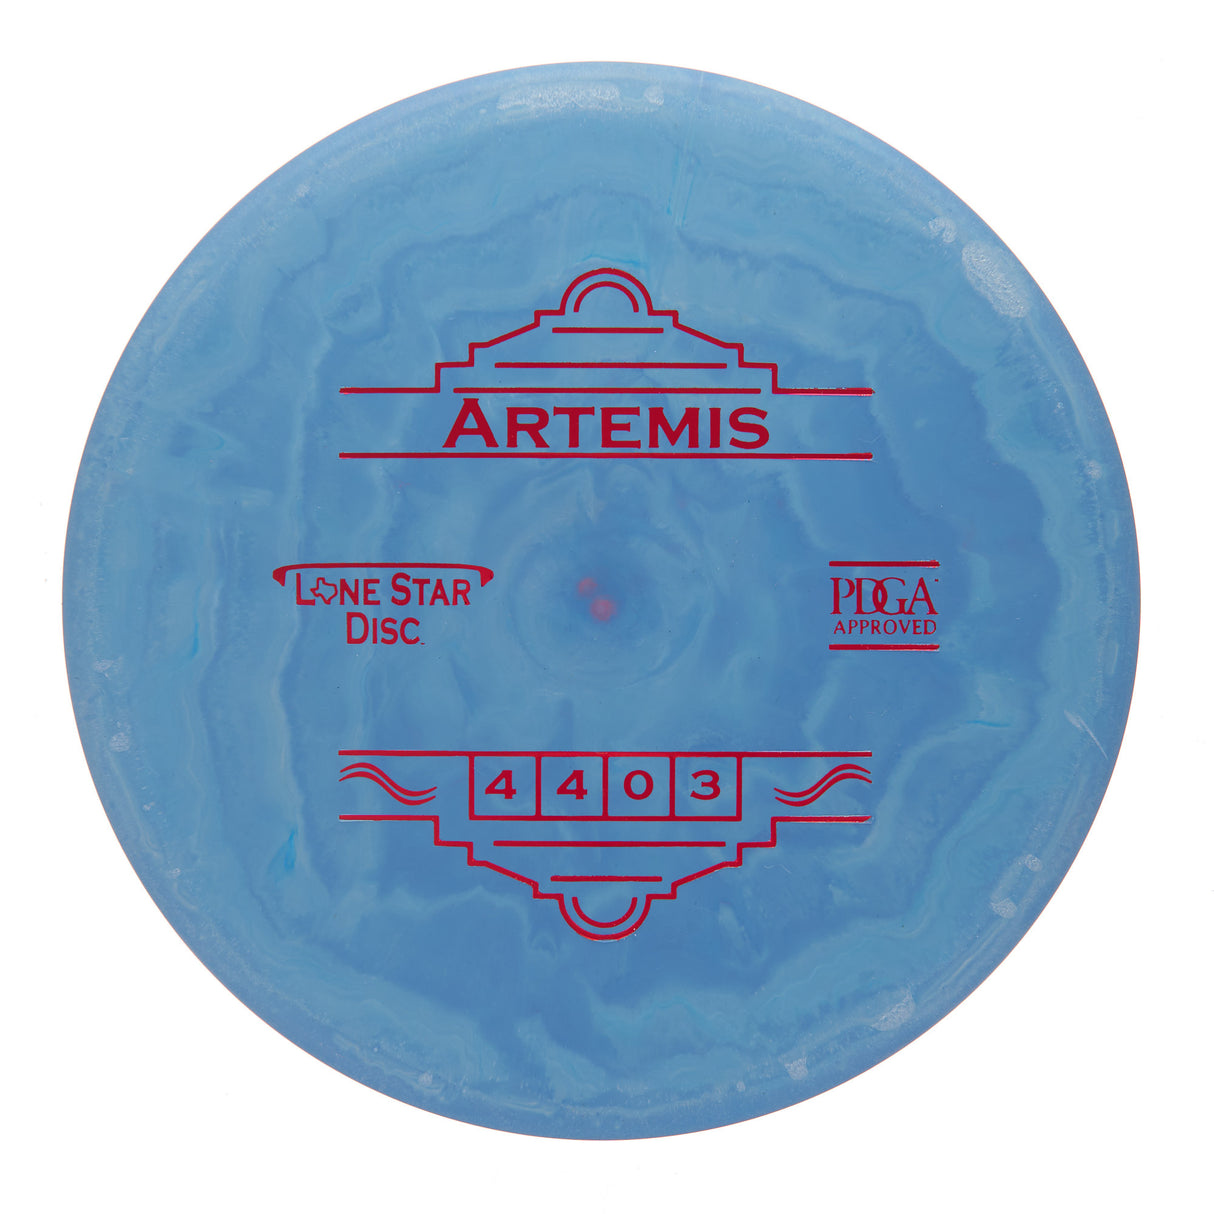 Lone Star Disc Artemis - Delta 2 172g | Style 0001